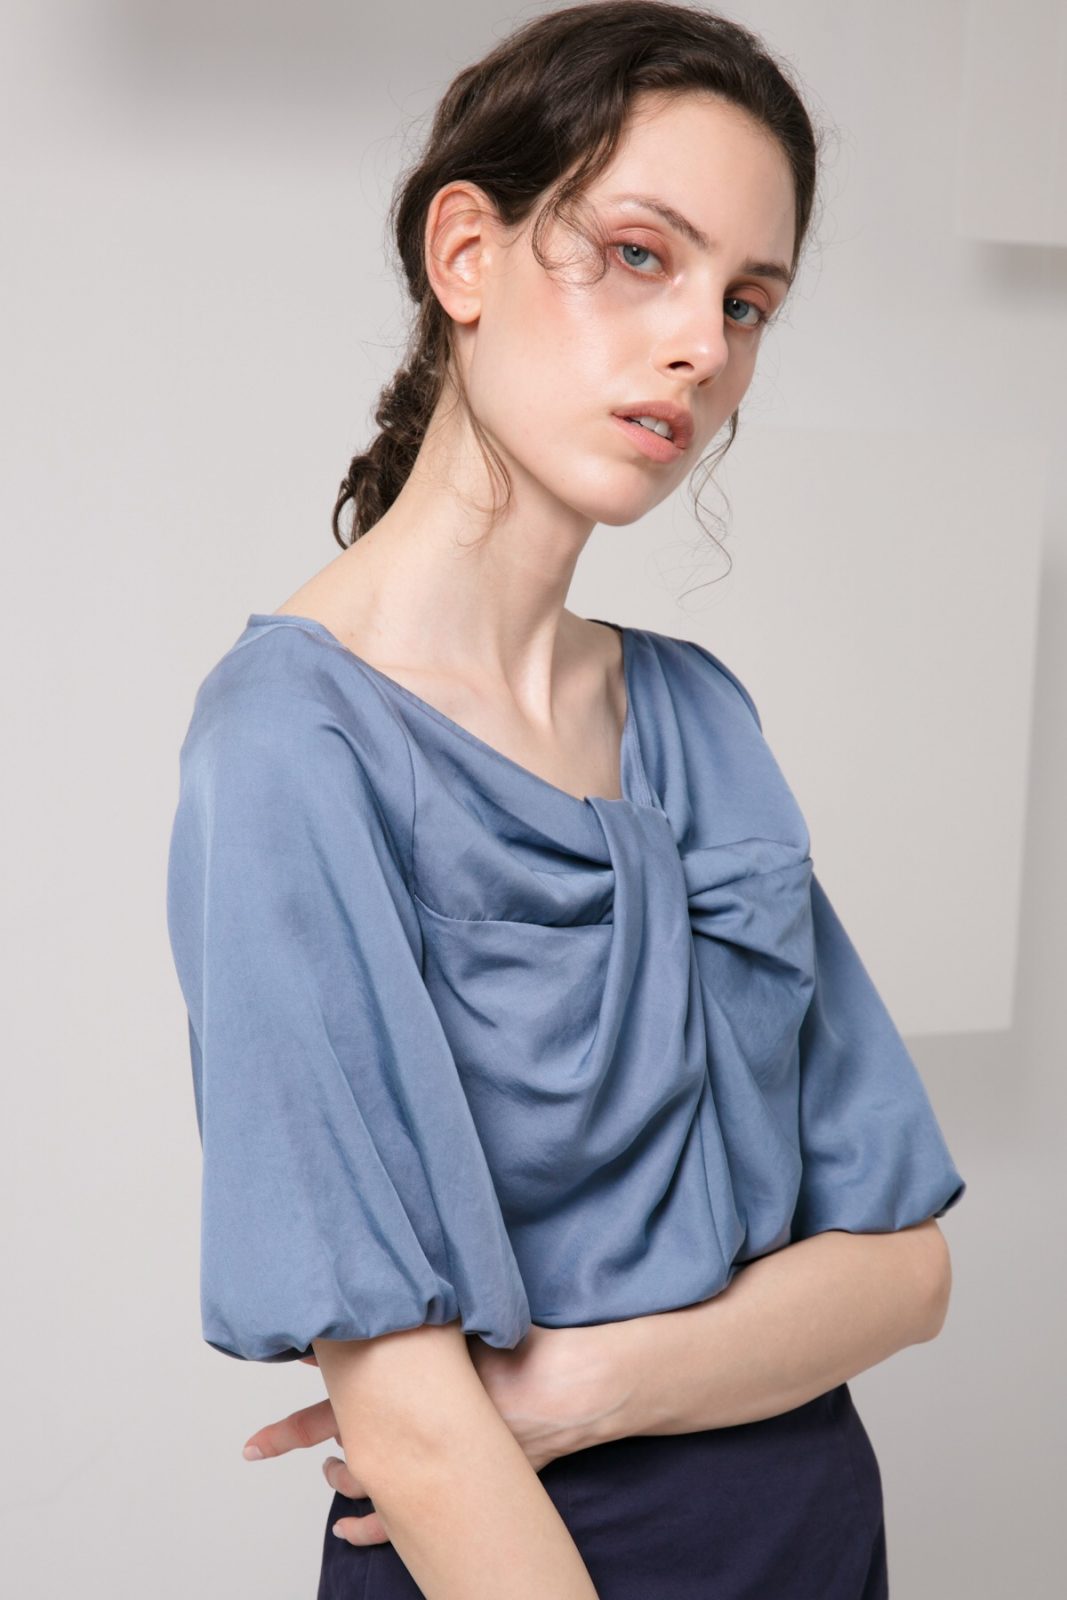 SKYE minimalist women clothing fashion Kai Knot Top blue 4